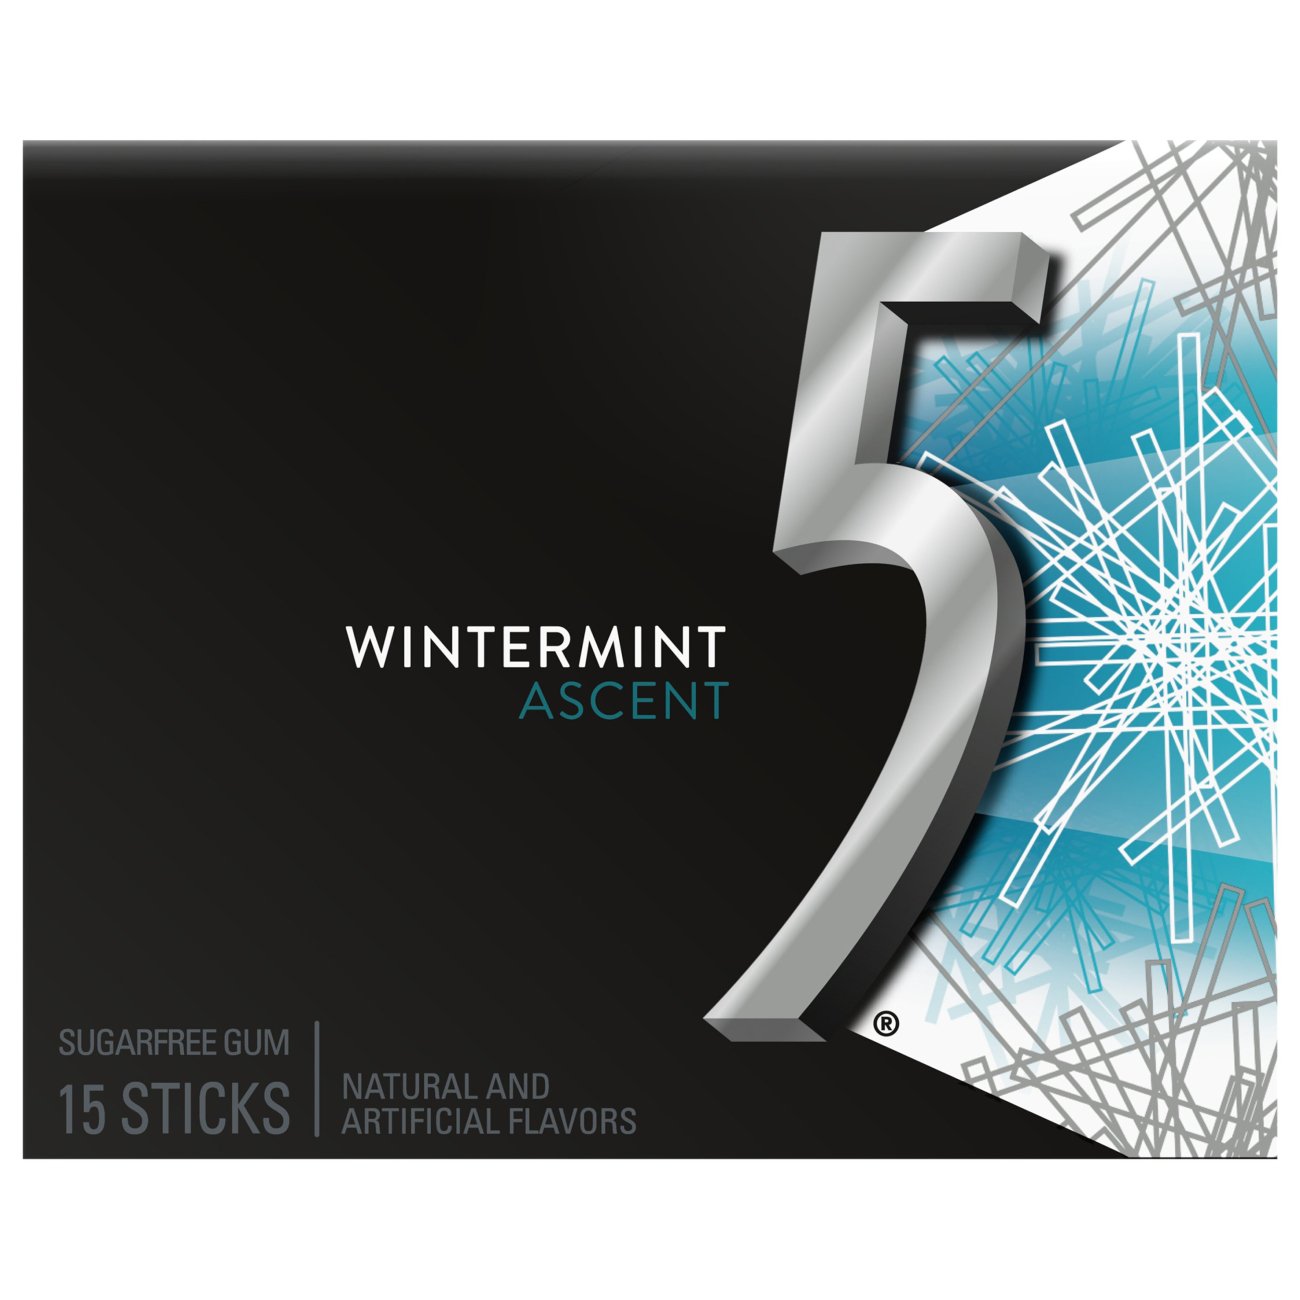 Wrigley's 5 Ascent Wintermint Sugarfree Gum - 15 sticks